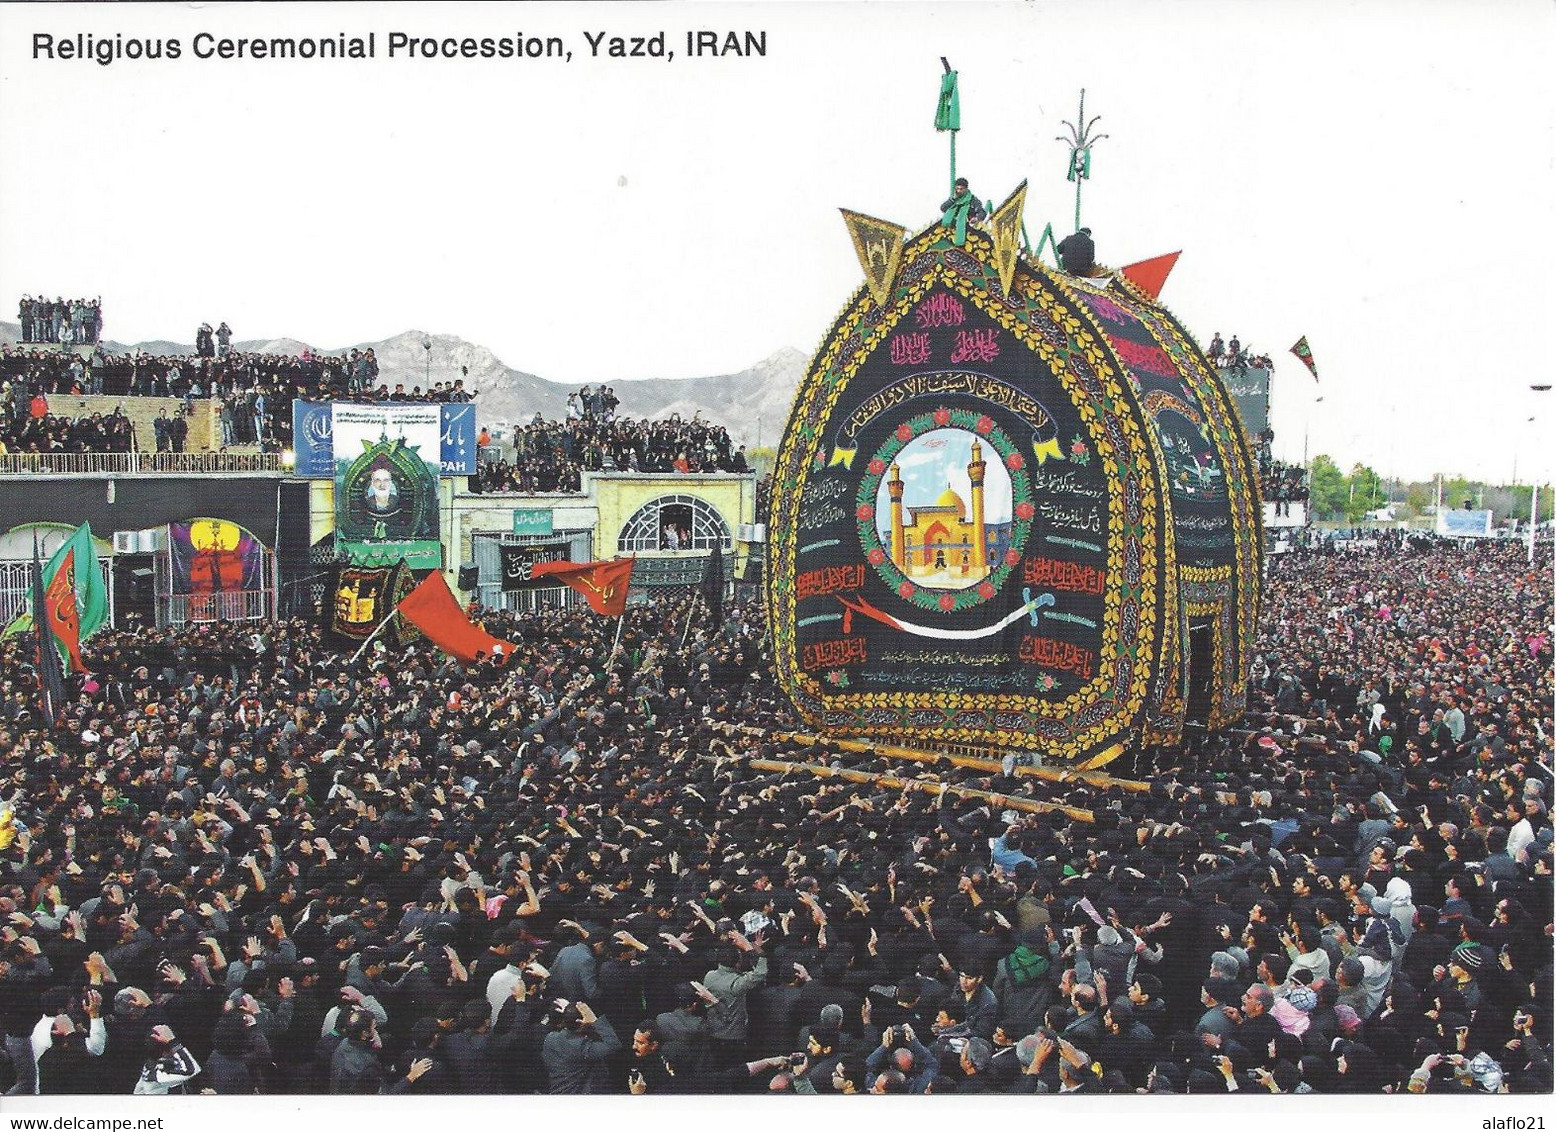 CPM IRAN - RELIGIOUS CEREMONIAL PROCESSION, YAZD - Iran